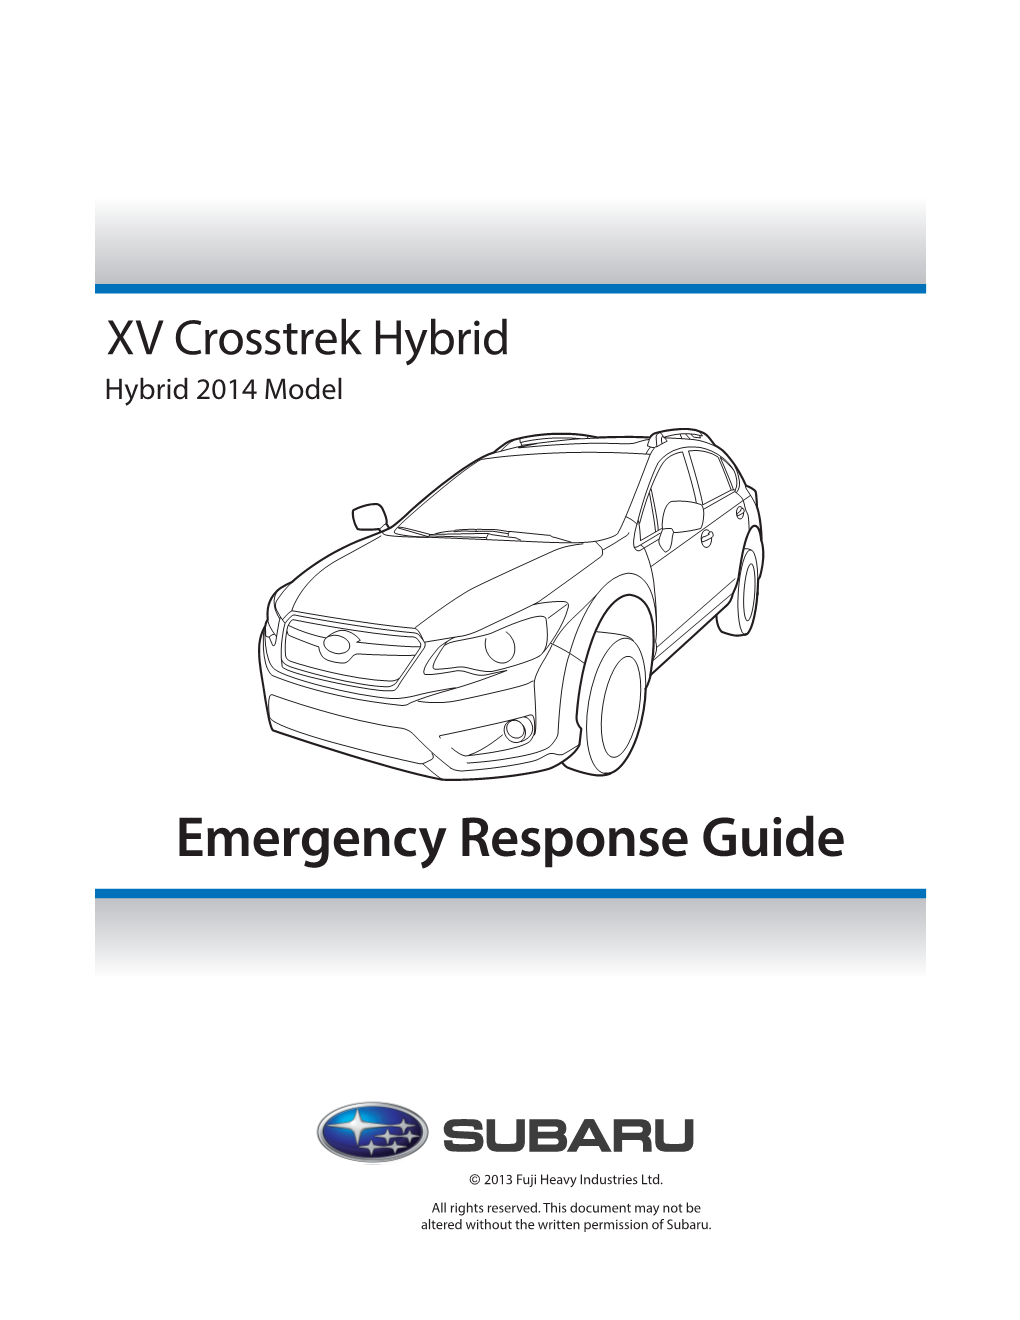 2014 XV Crosstrek Gasoline-Electric Hybrid Emergency Response Guide